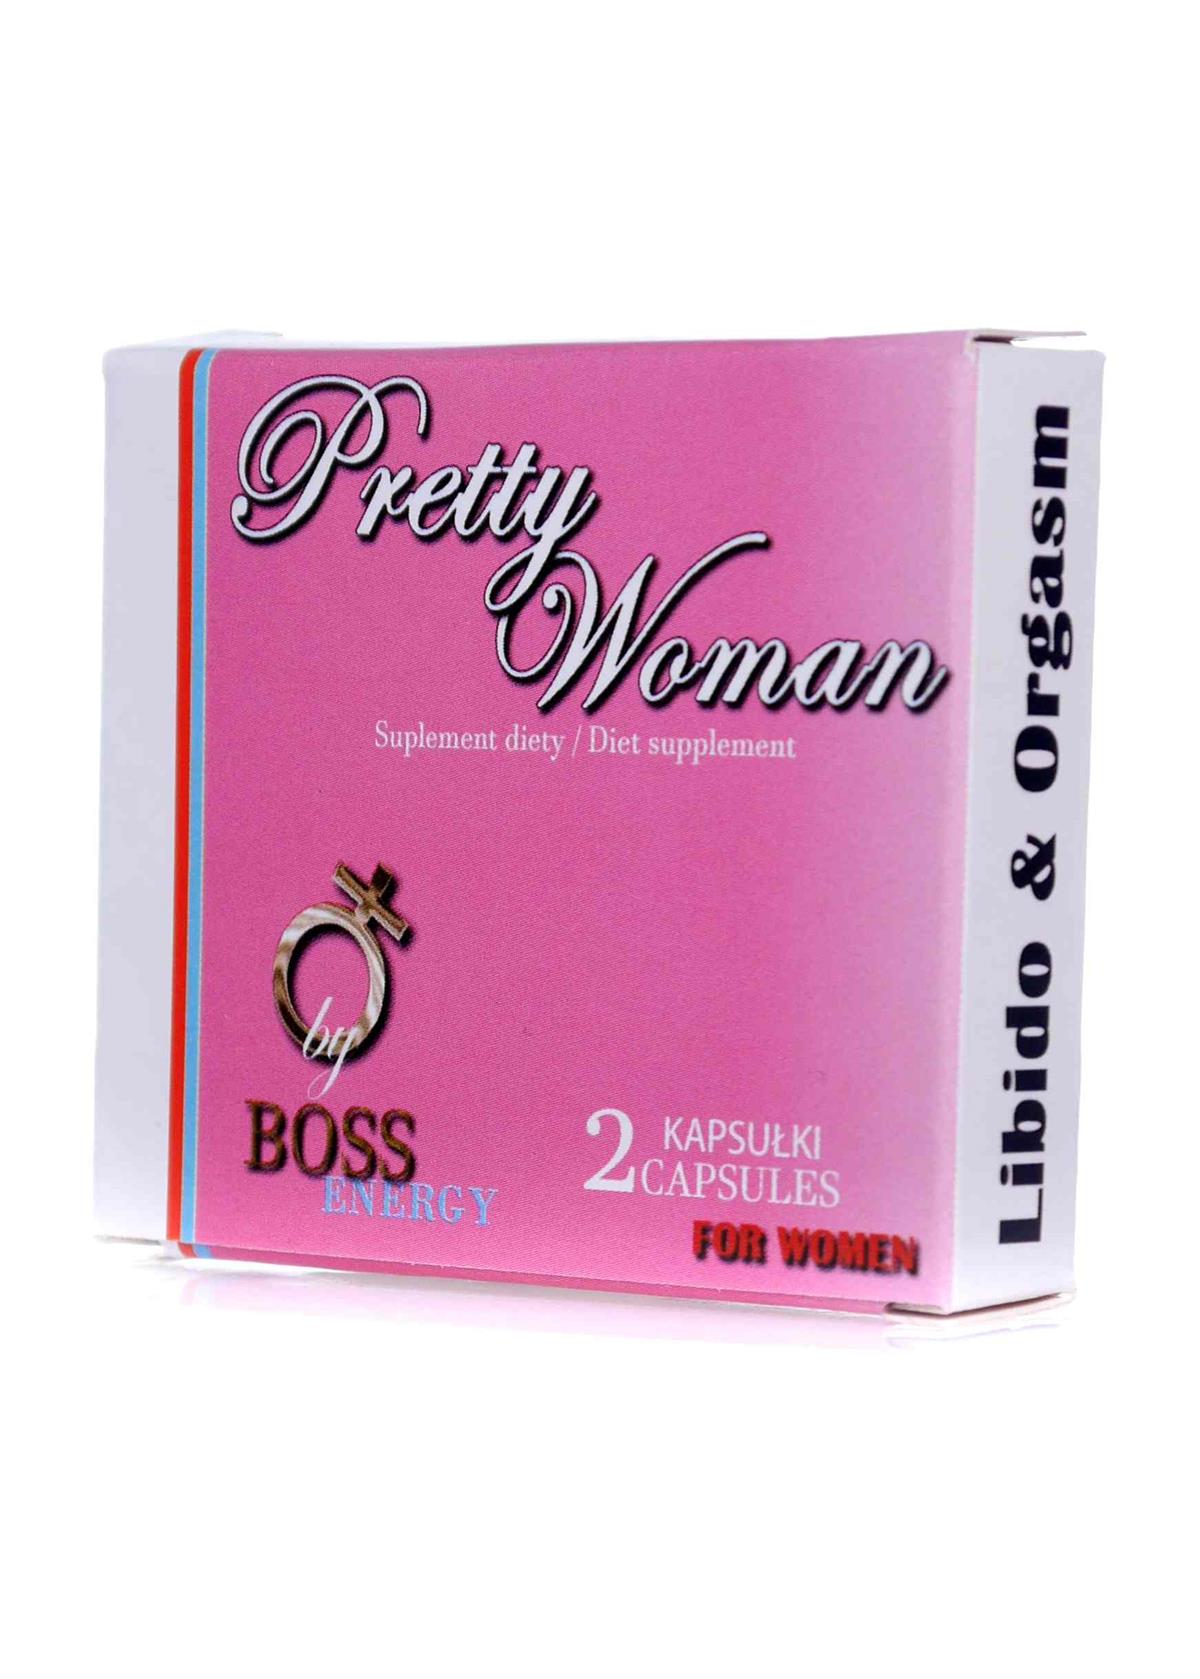 Bossoftoys - Diet supplement - Pretty Woman 2 pcs - Gets higher libido -  45-00004